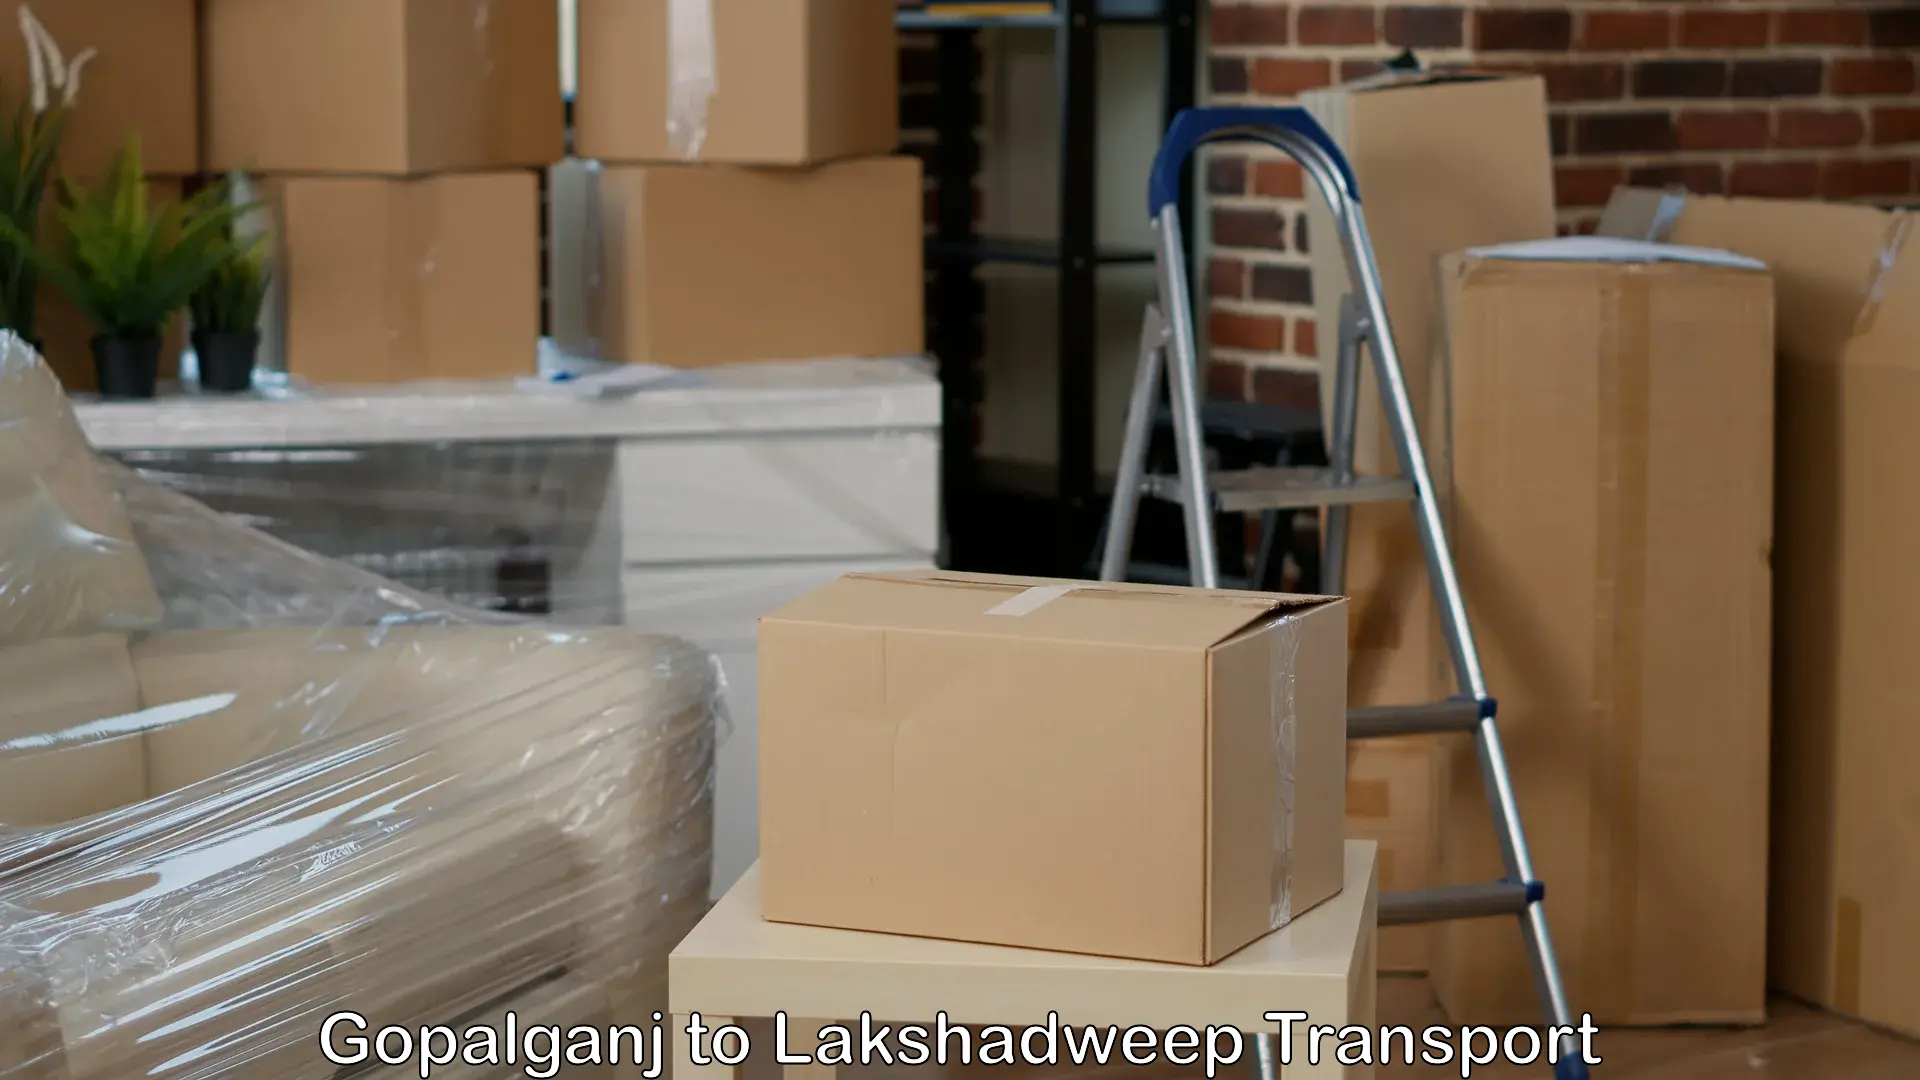 Shipping partner Gopalganj to Lakshadweep